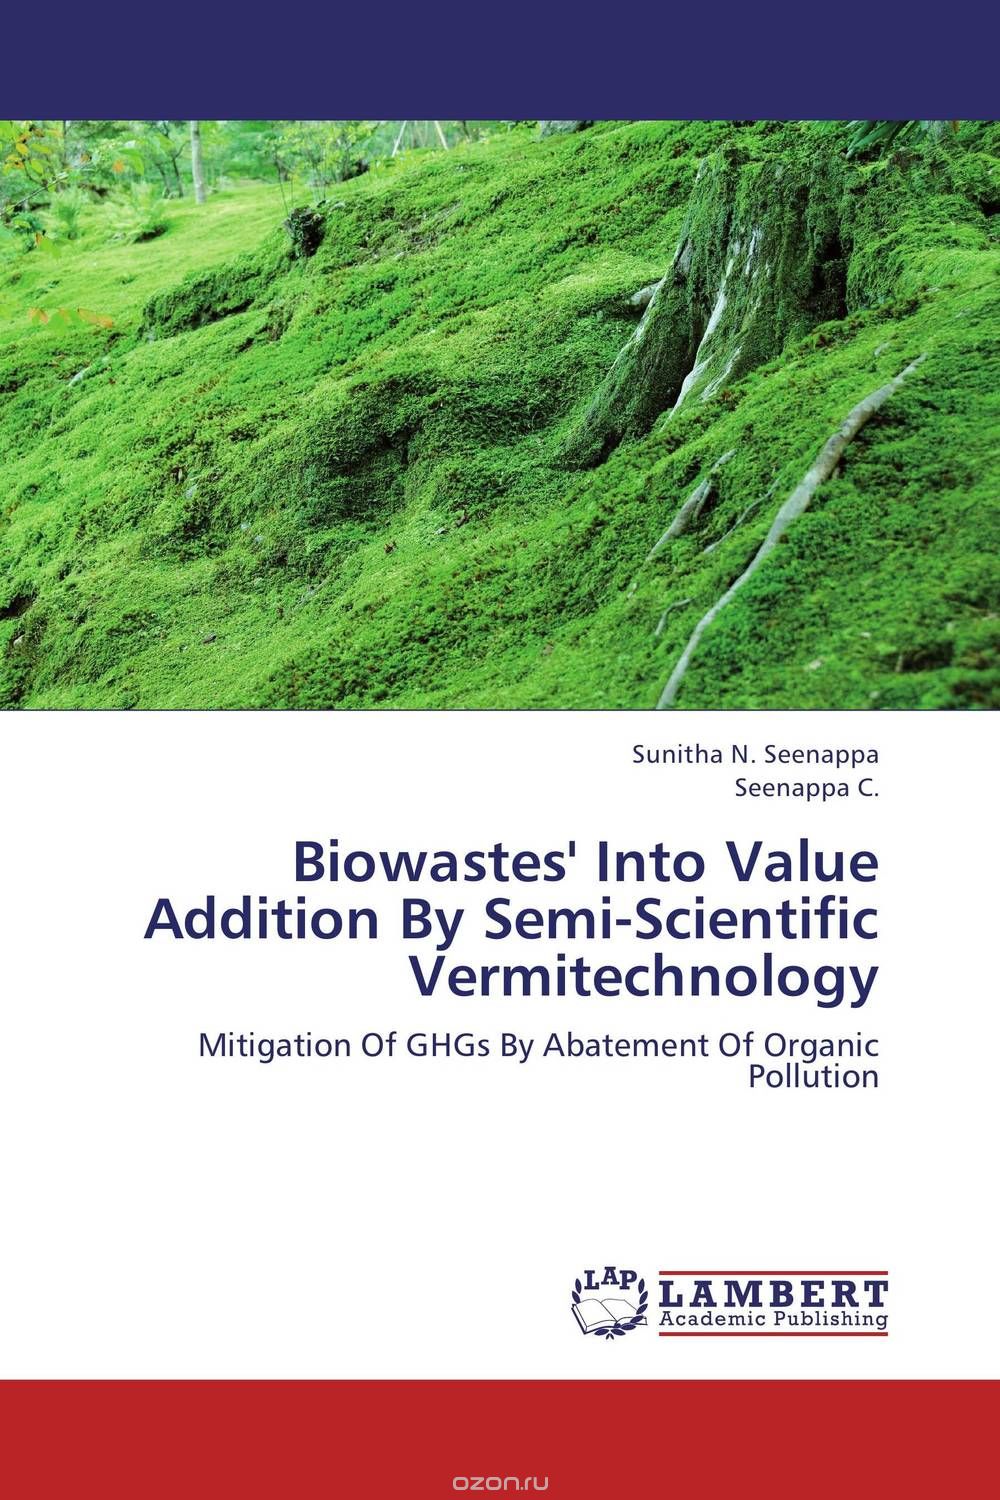 Biowastes' Into Value Addition By Semi-Scientific Vermitechnology